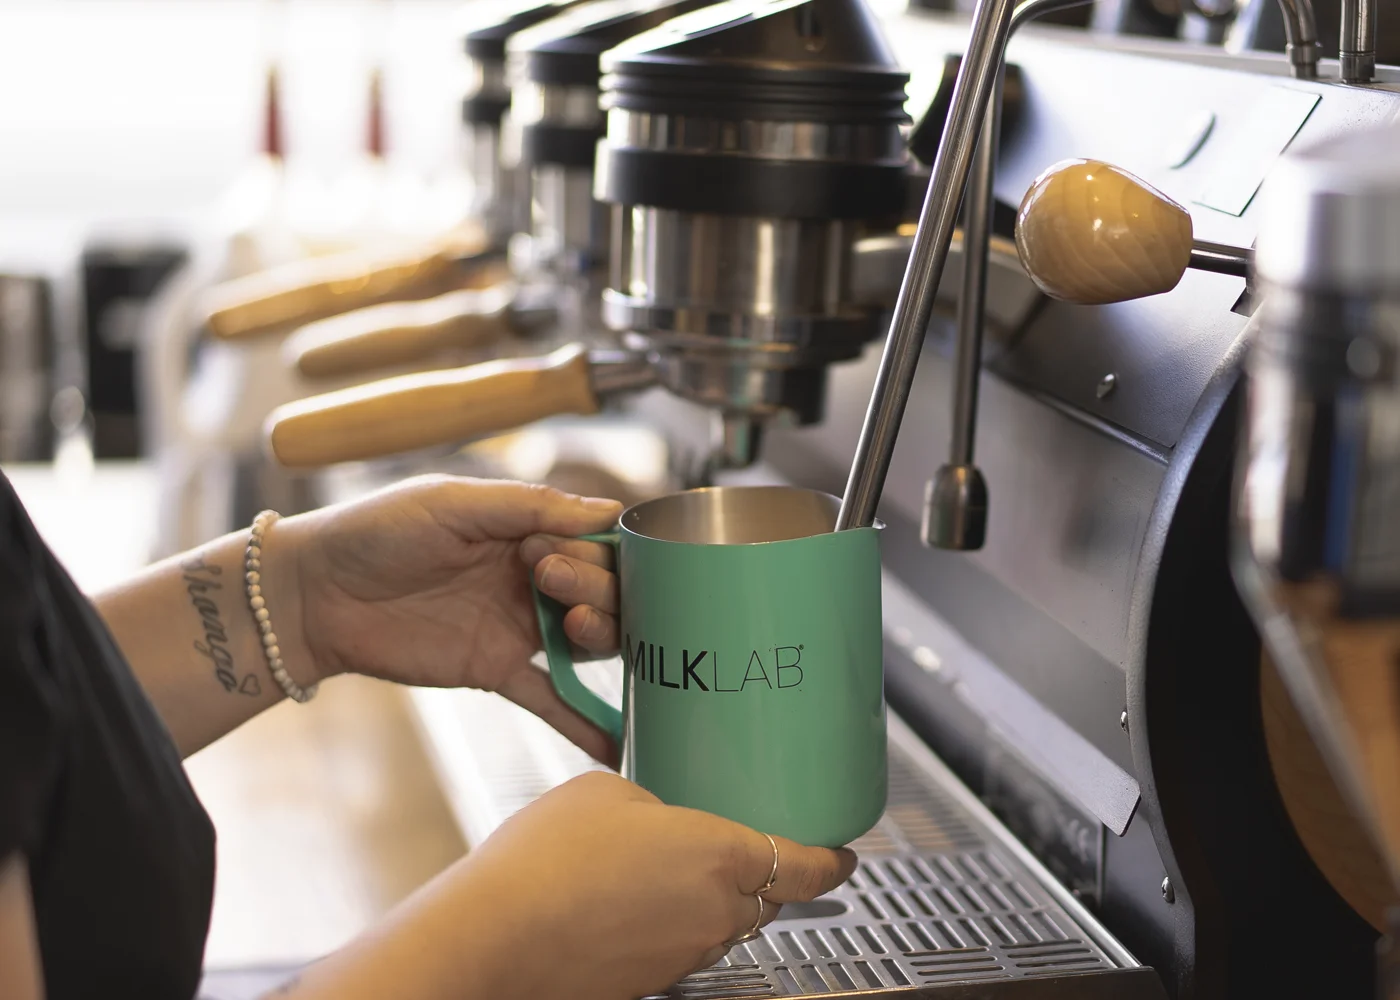 Milklab, barista skills, stretching & heating milk for coffee